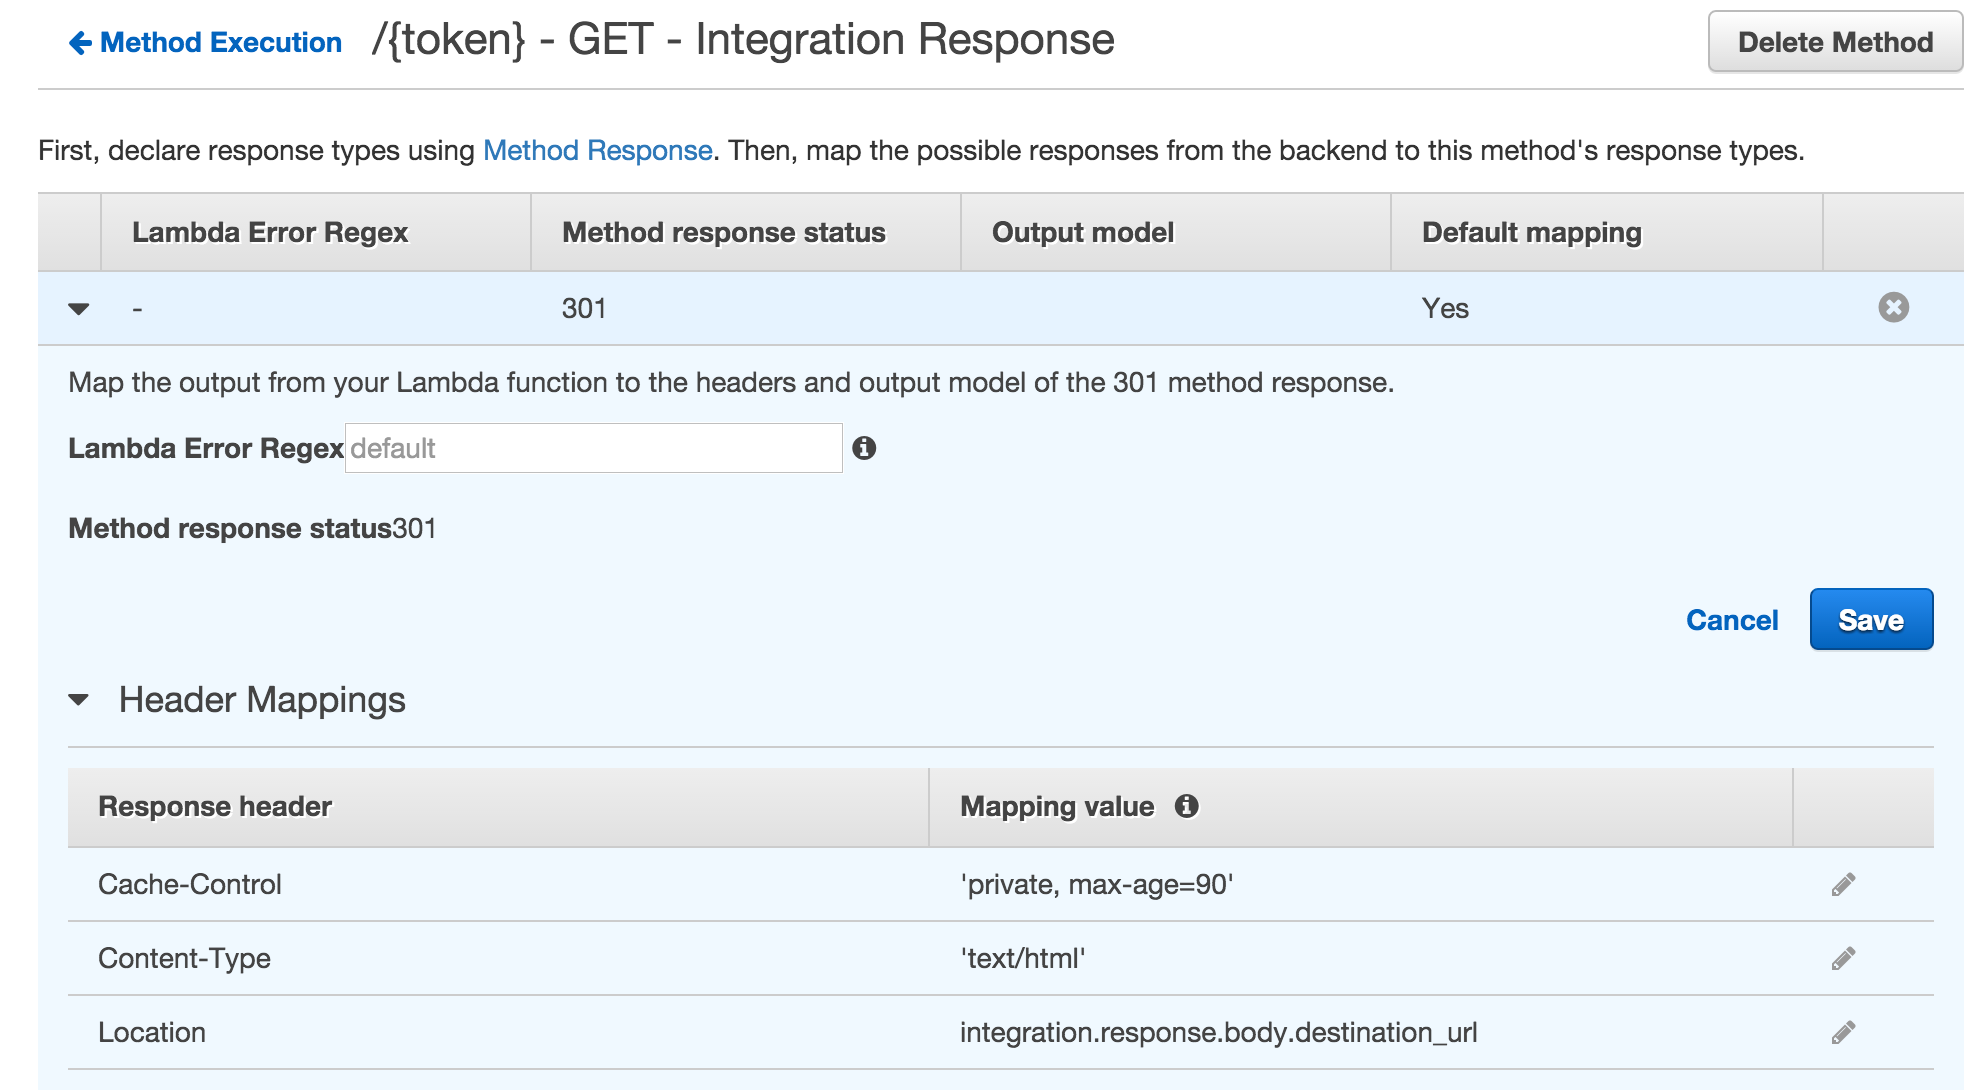 /{token} endpoint GET method Integration Response settings